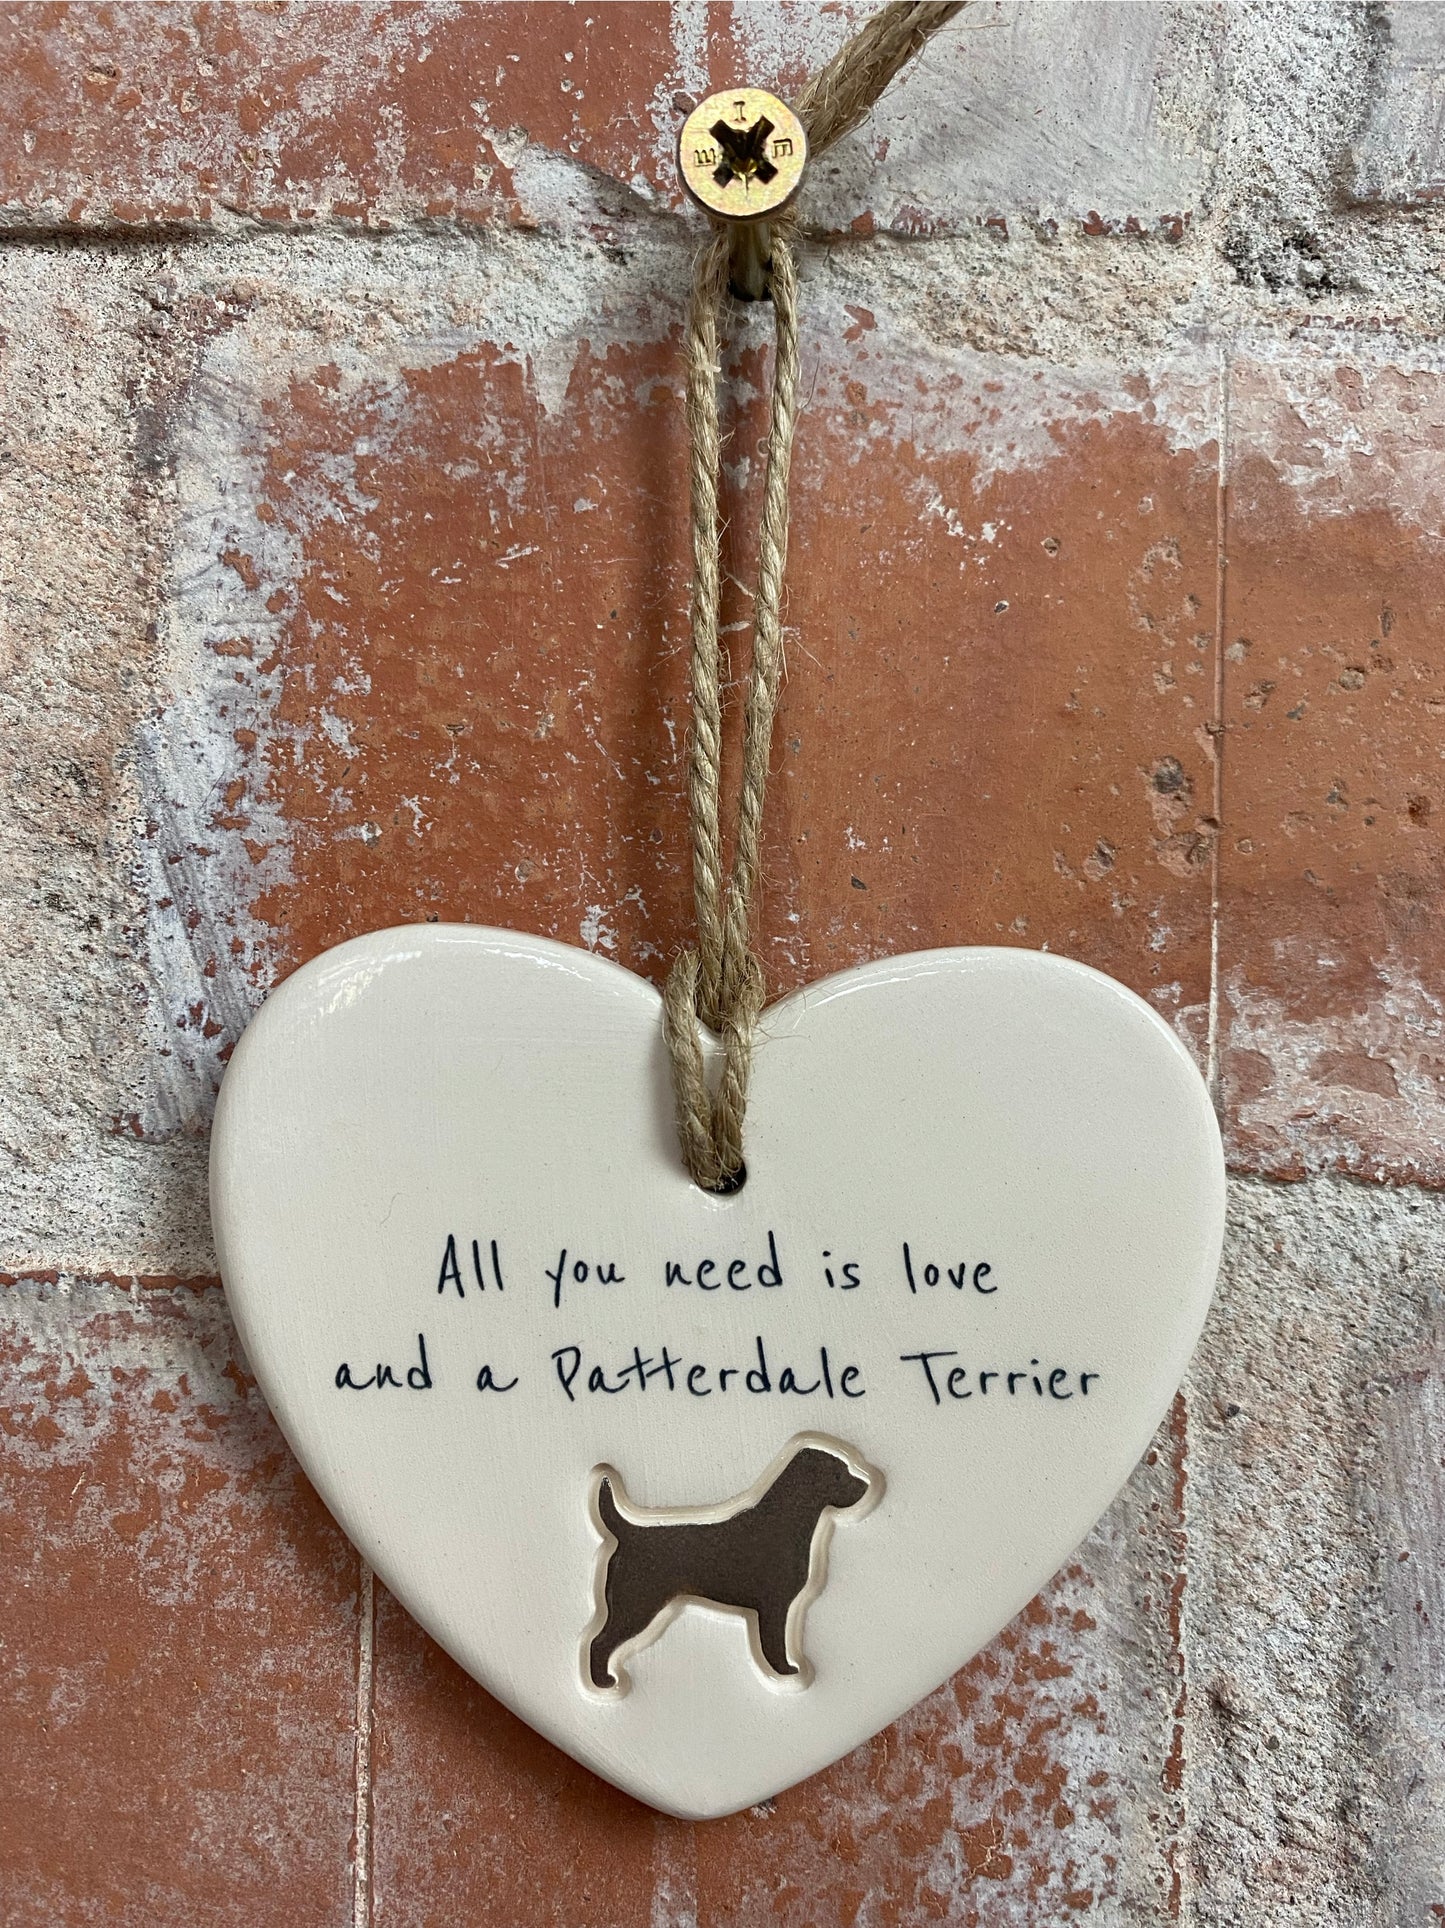 Patterdale Terrier ceramic heart